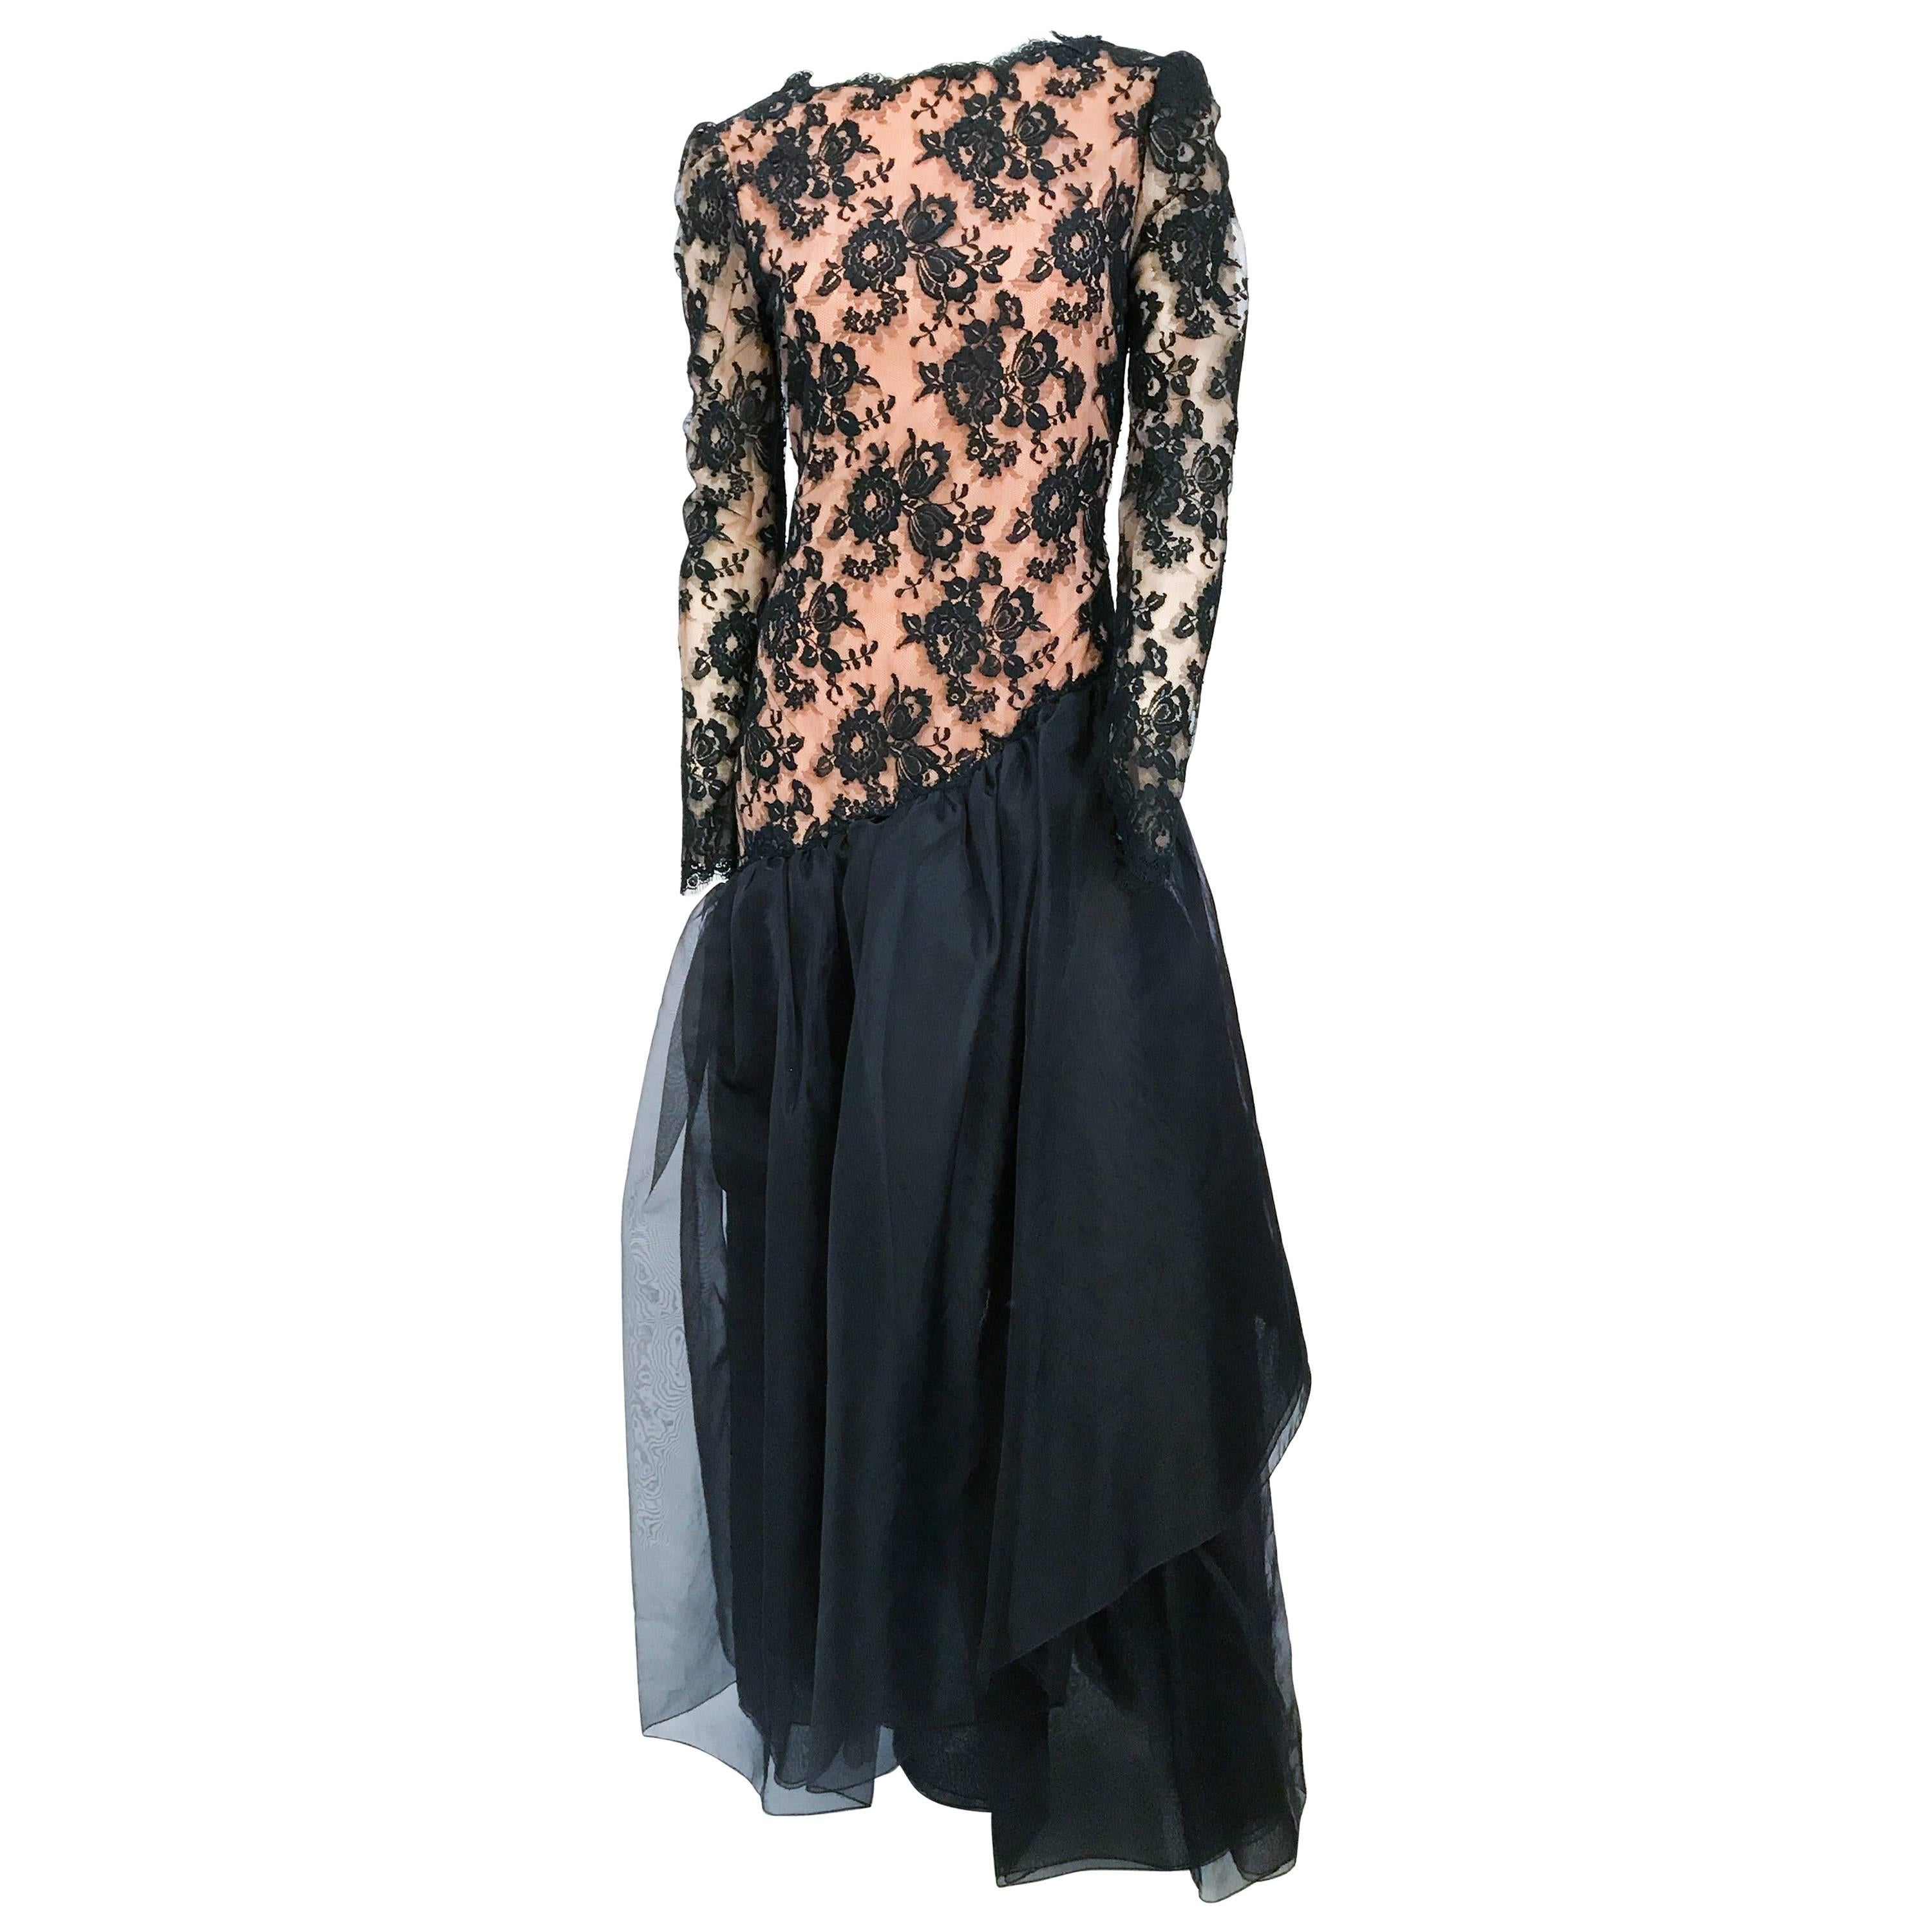 1980s Travilla Black Floral Lace Dress